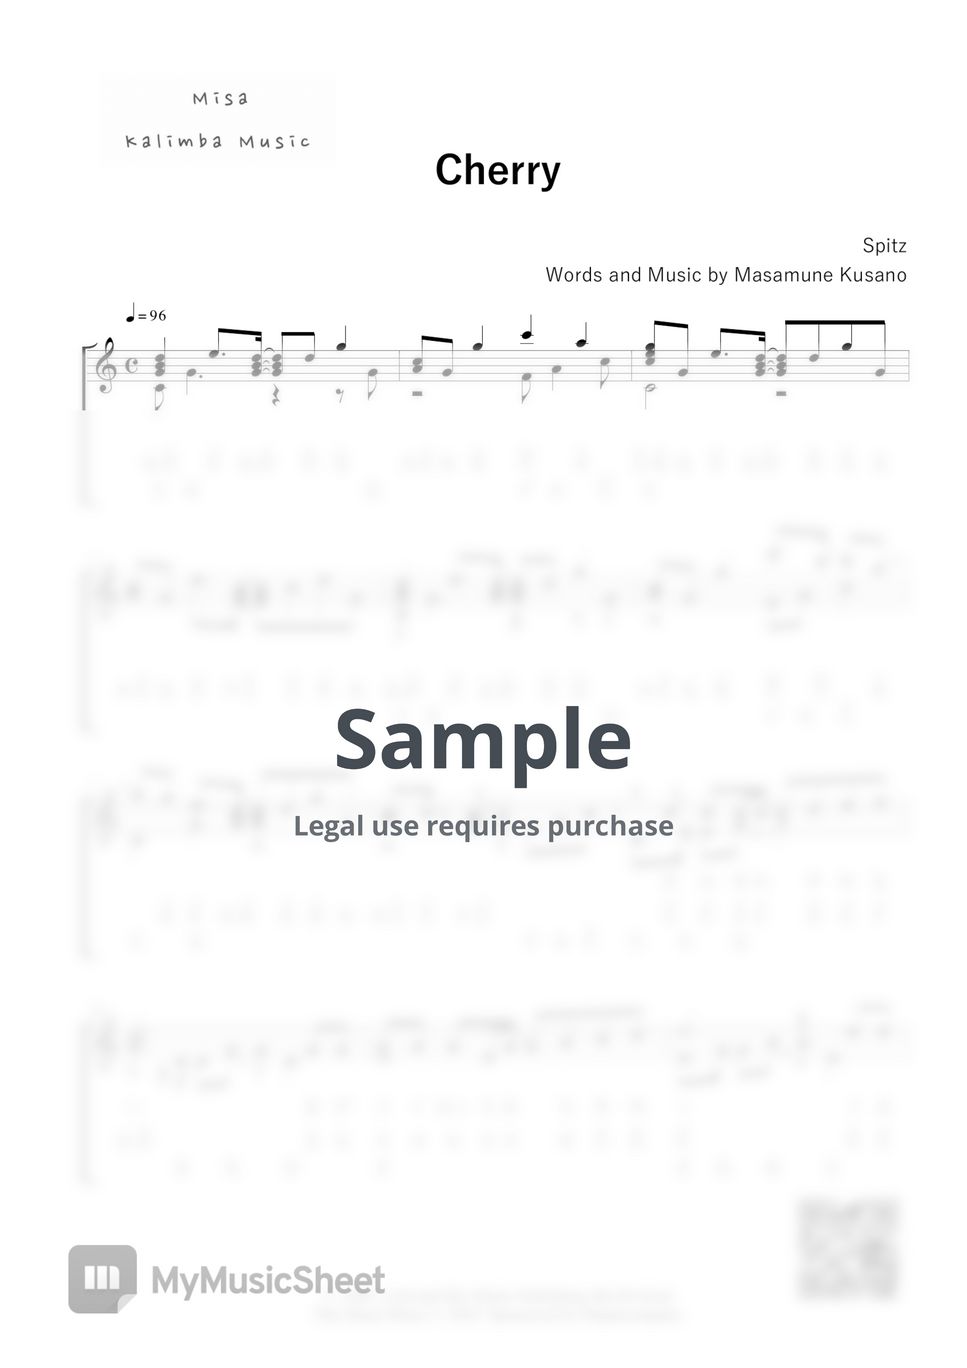 Spitz - Cherry / 17 keys kalimba / Letter Notation by Misa / Kalimba Music